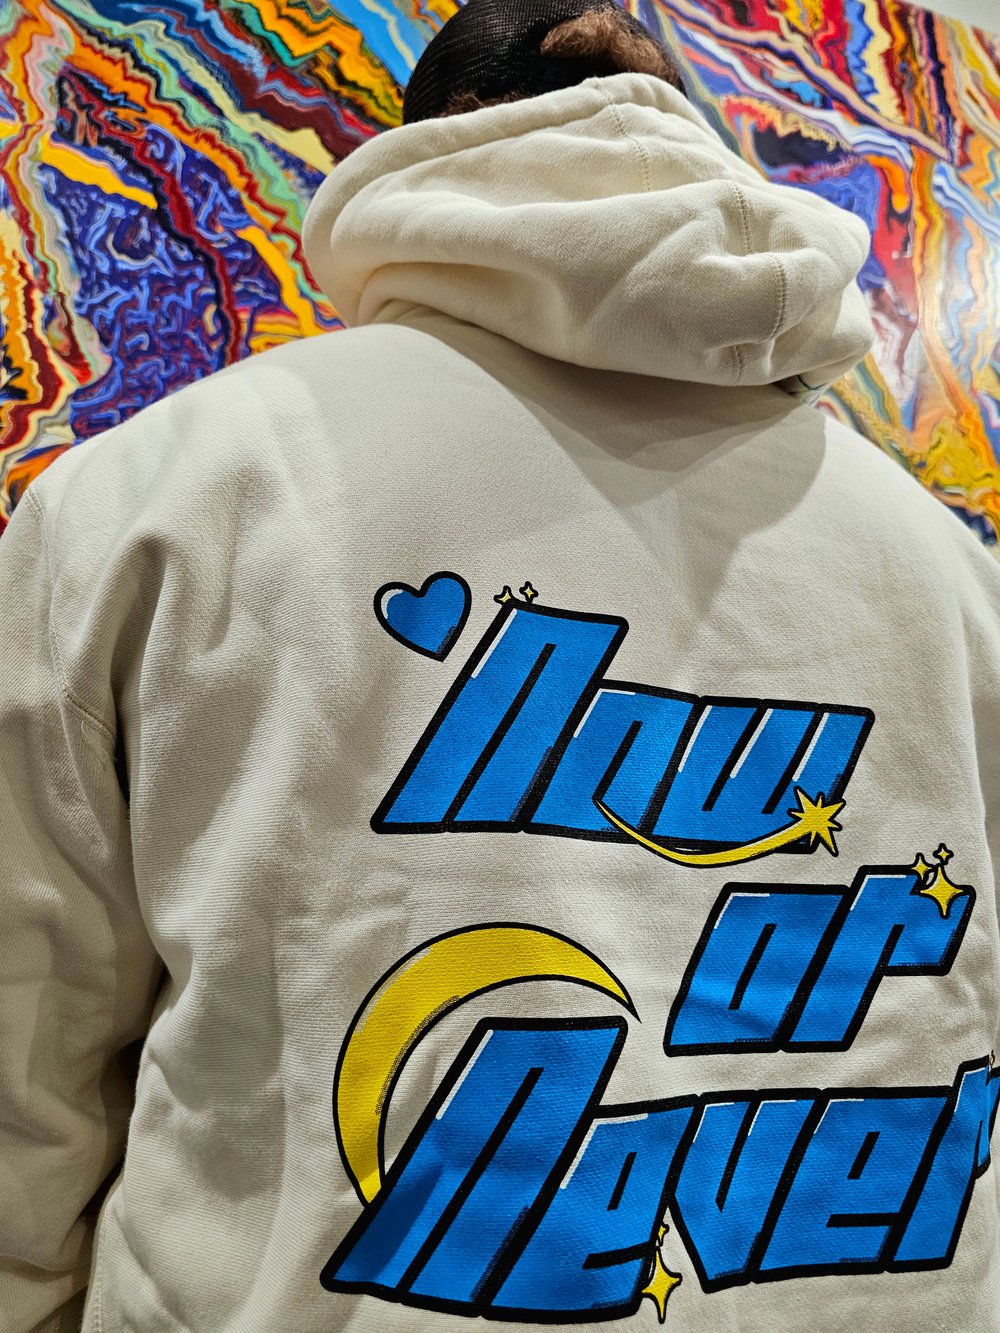 Now or Never studio hoodie